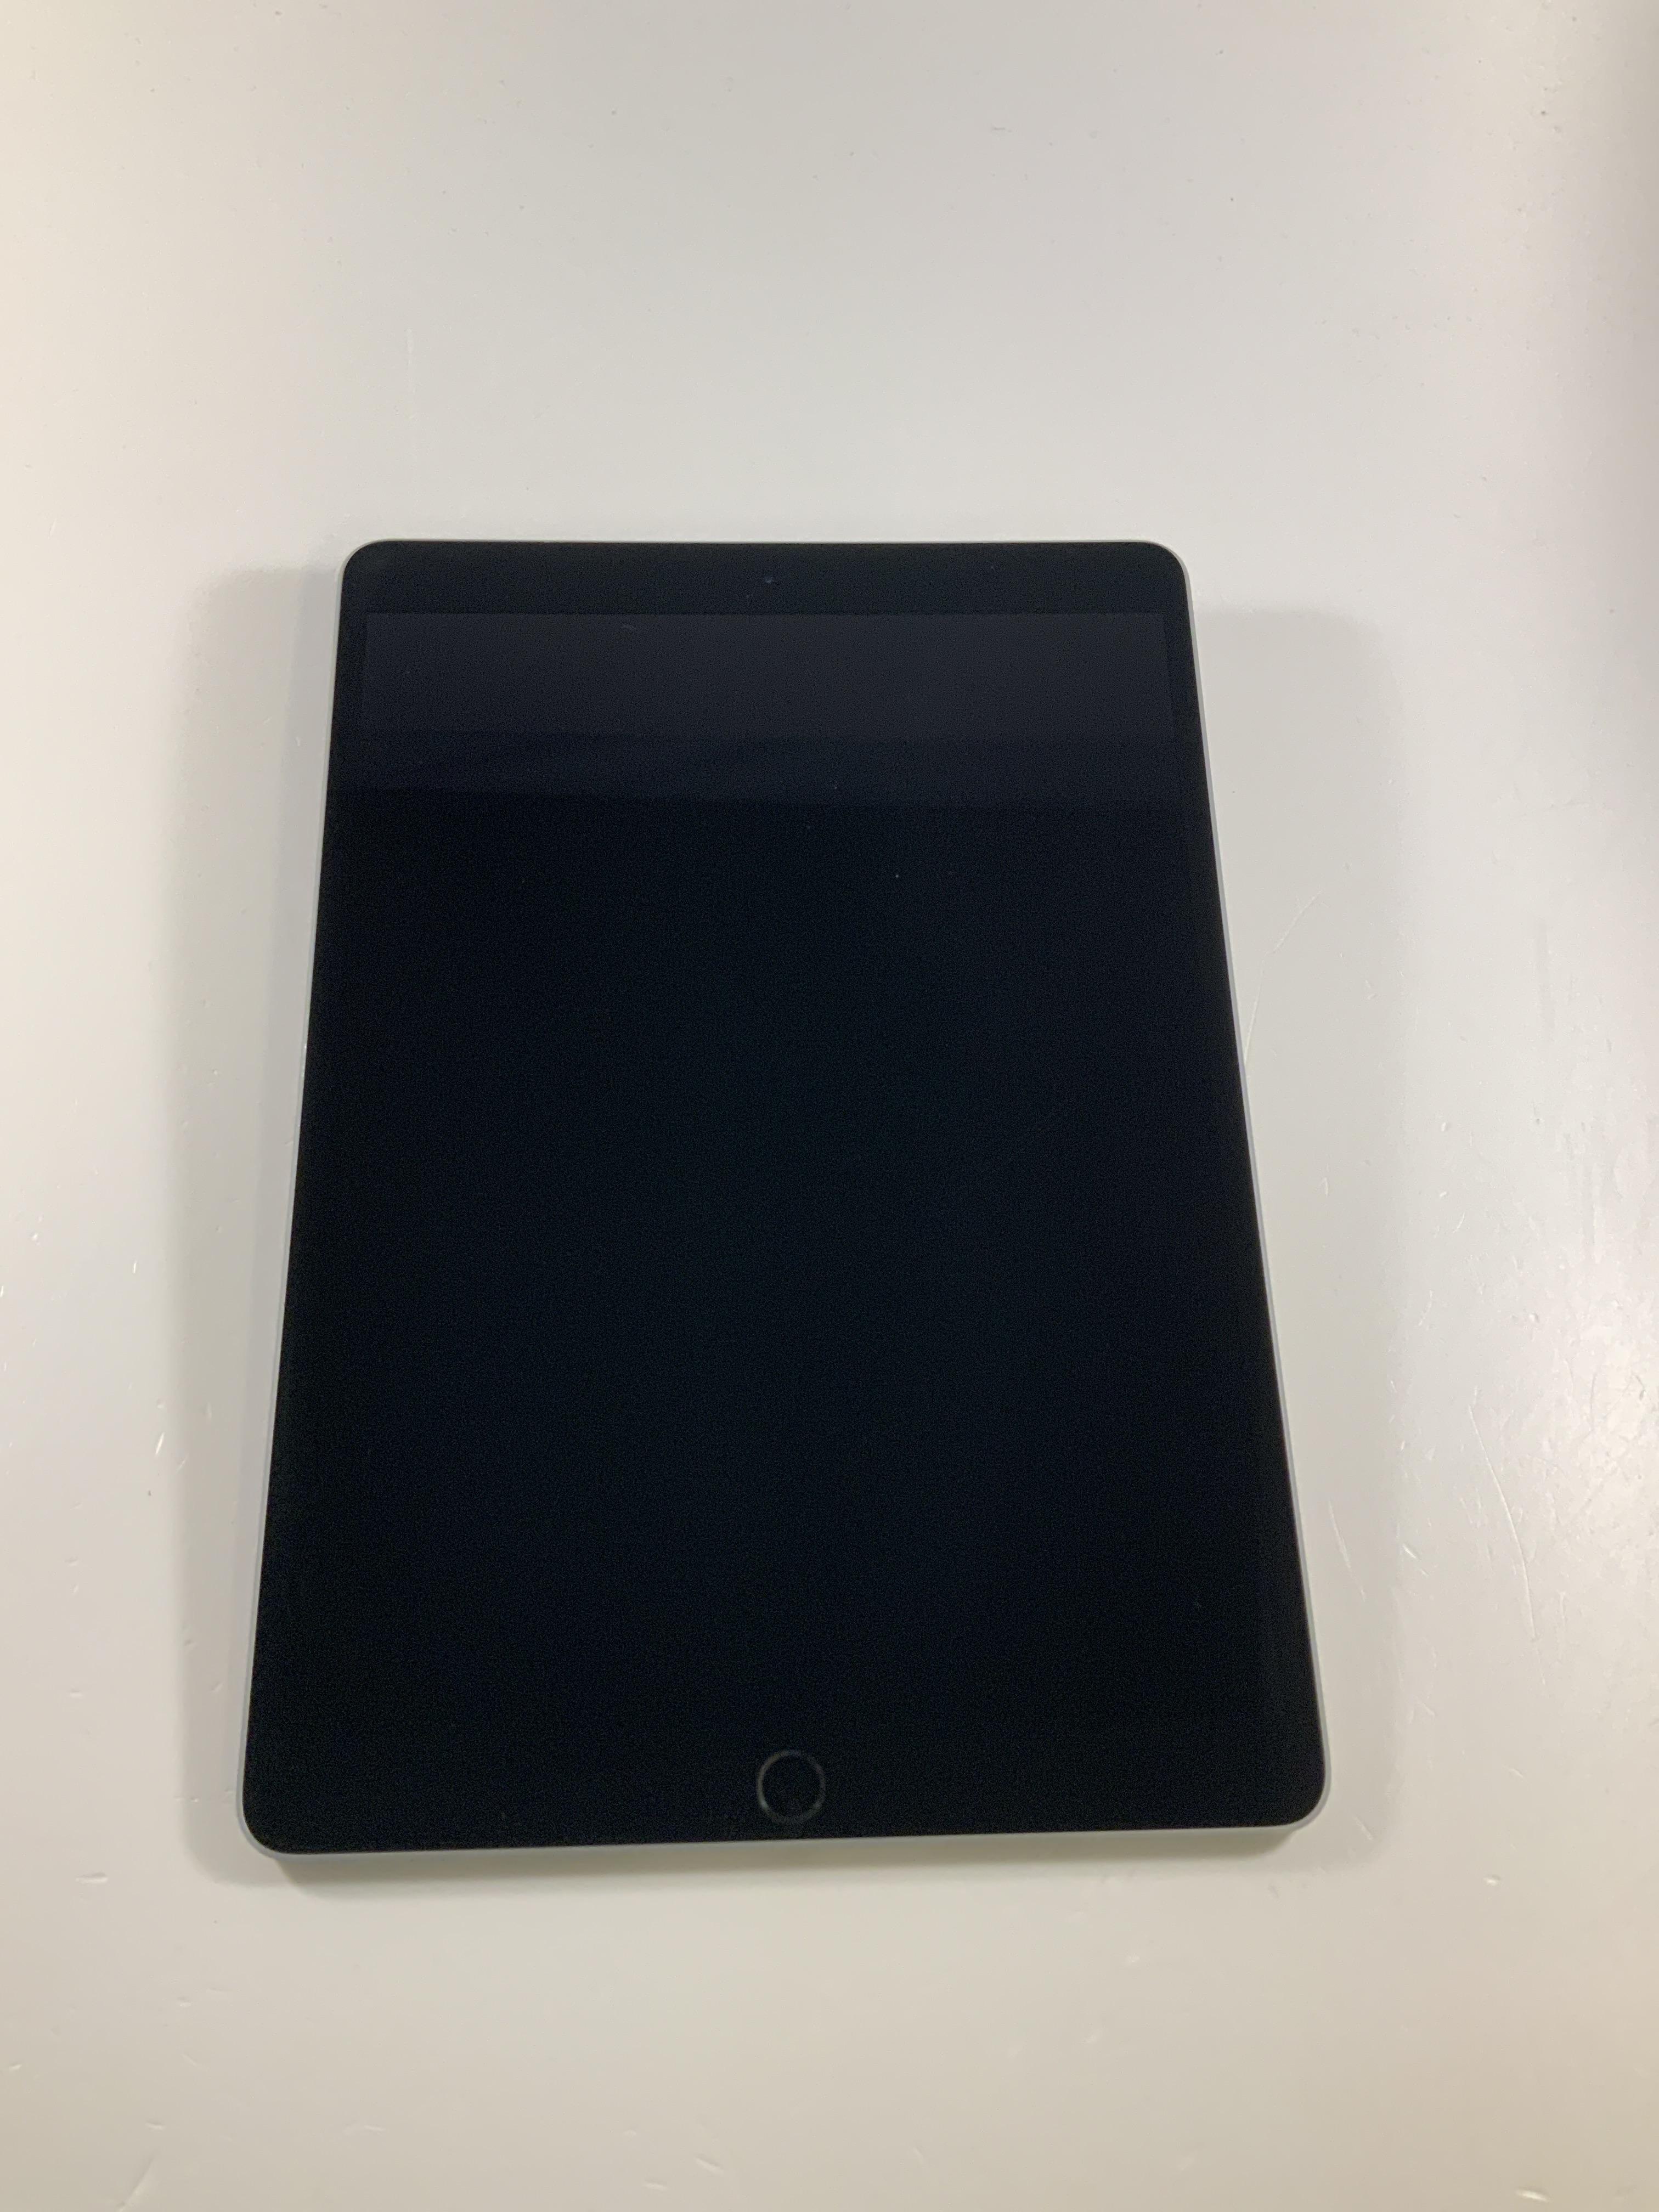 iPad Pro 10.5" Wi-Fi + Cellular 64GB, 64GB, Space Gray, immagine 1